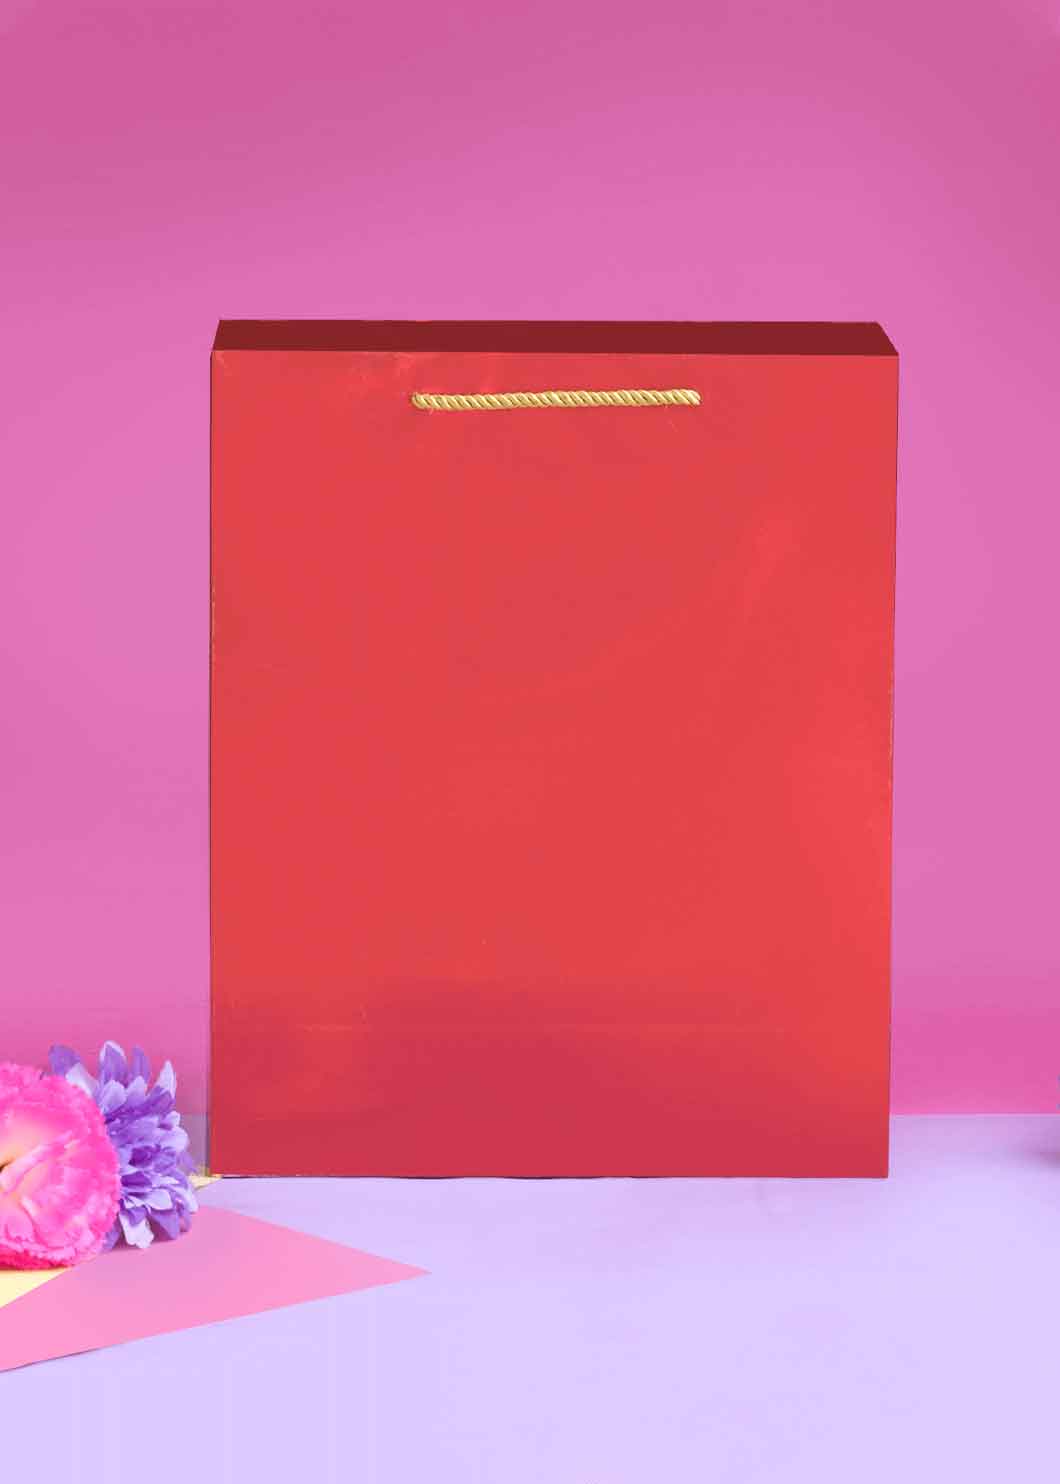 Shiny Bag - Plain Shiny Red Blue Bag With Handle - Laminated Paper Bag